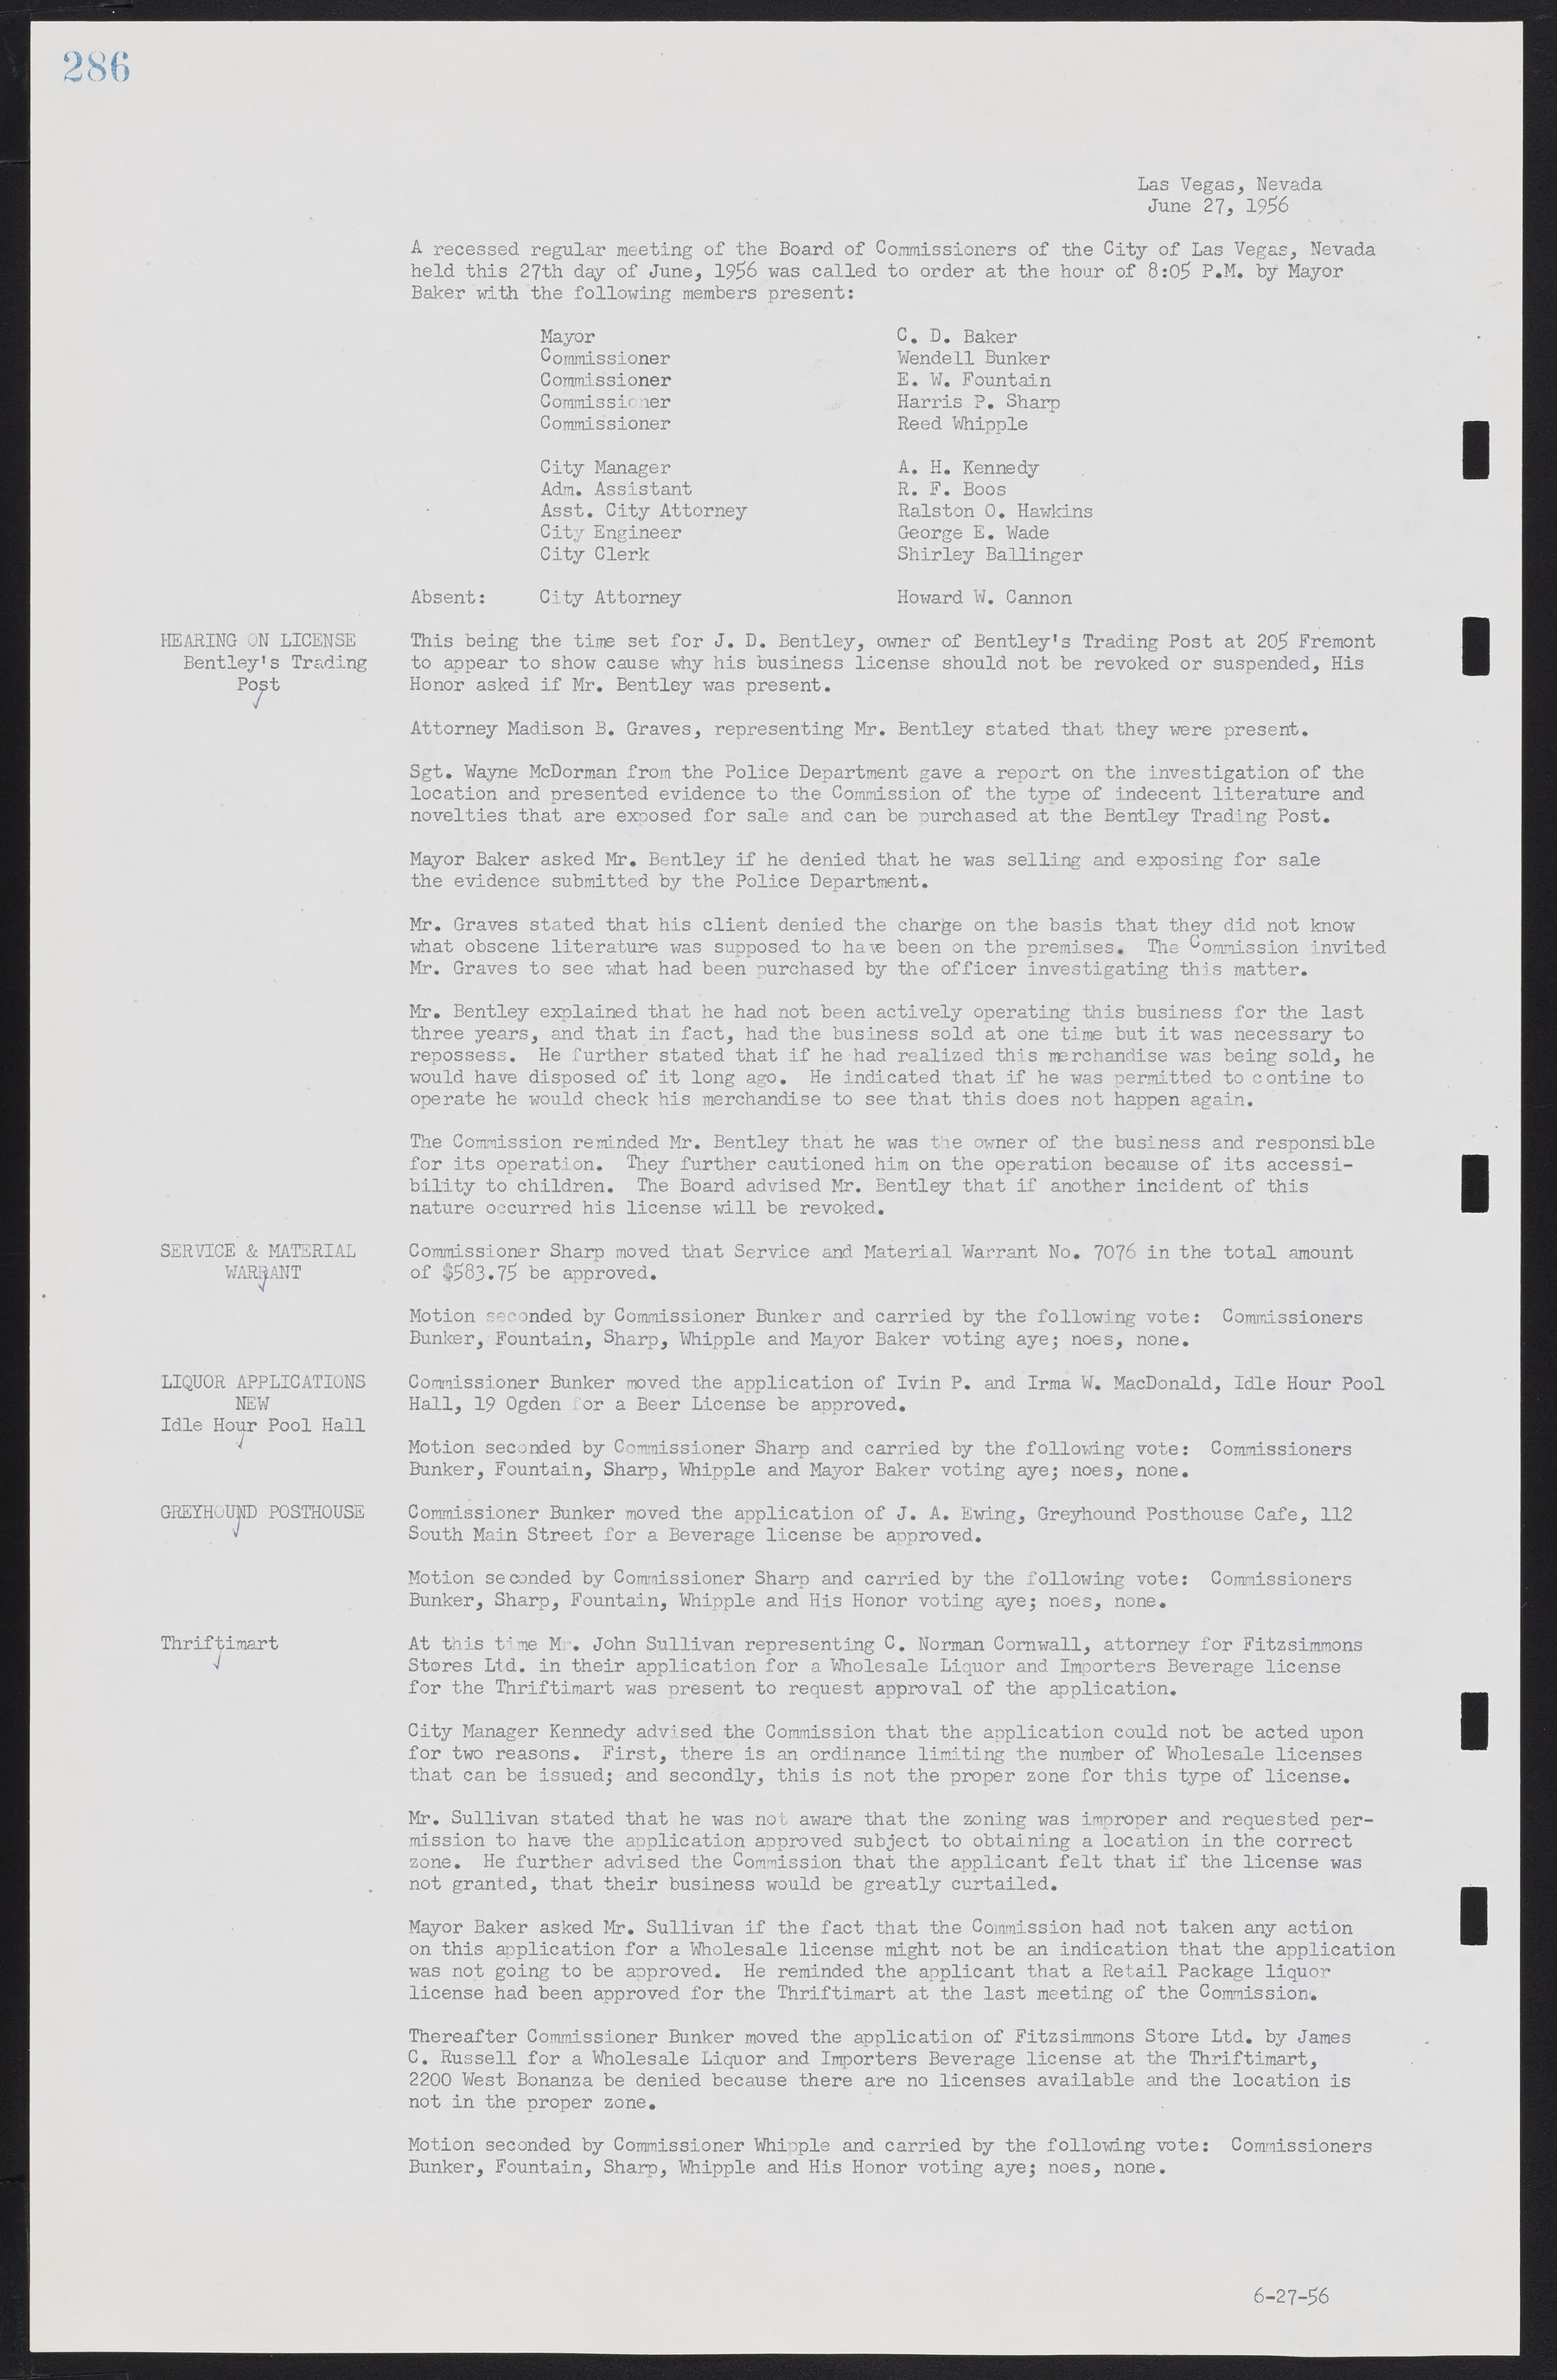 Las Vegas City Commission Minutes, September 21, 1955 to November 20, 1957, lvc000010-306